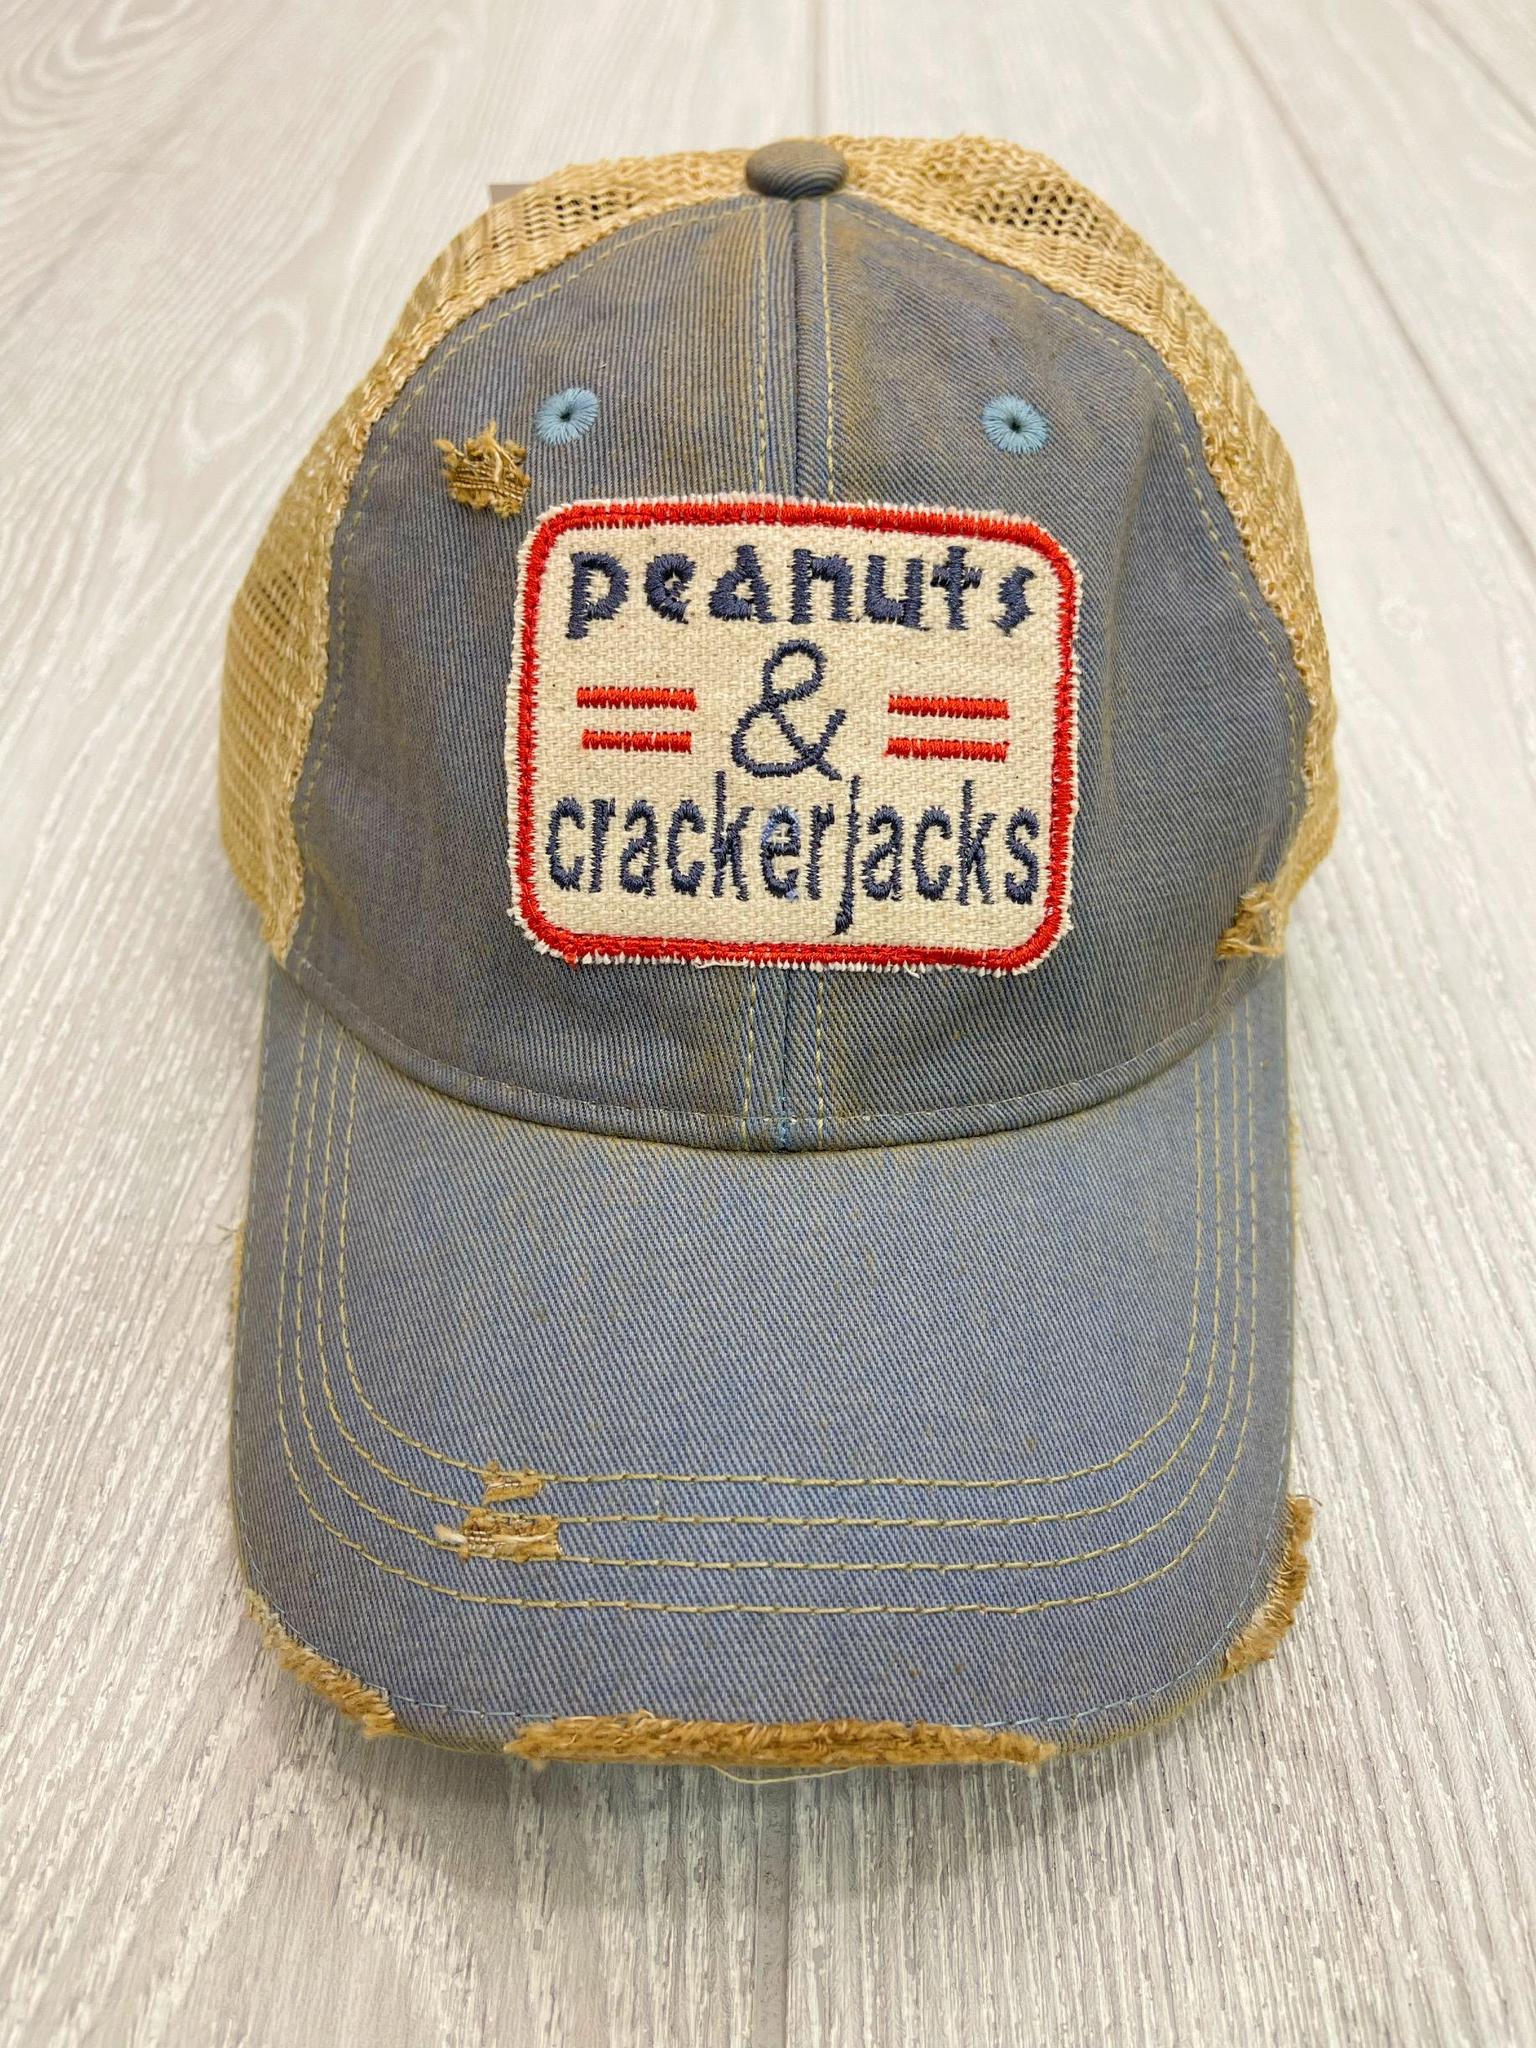 Peanuts & Cracker Jacks Patch Hat